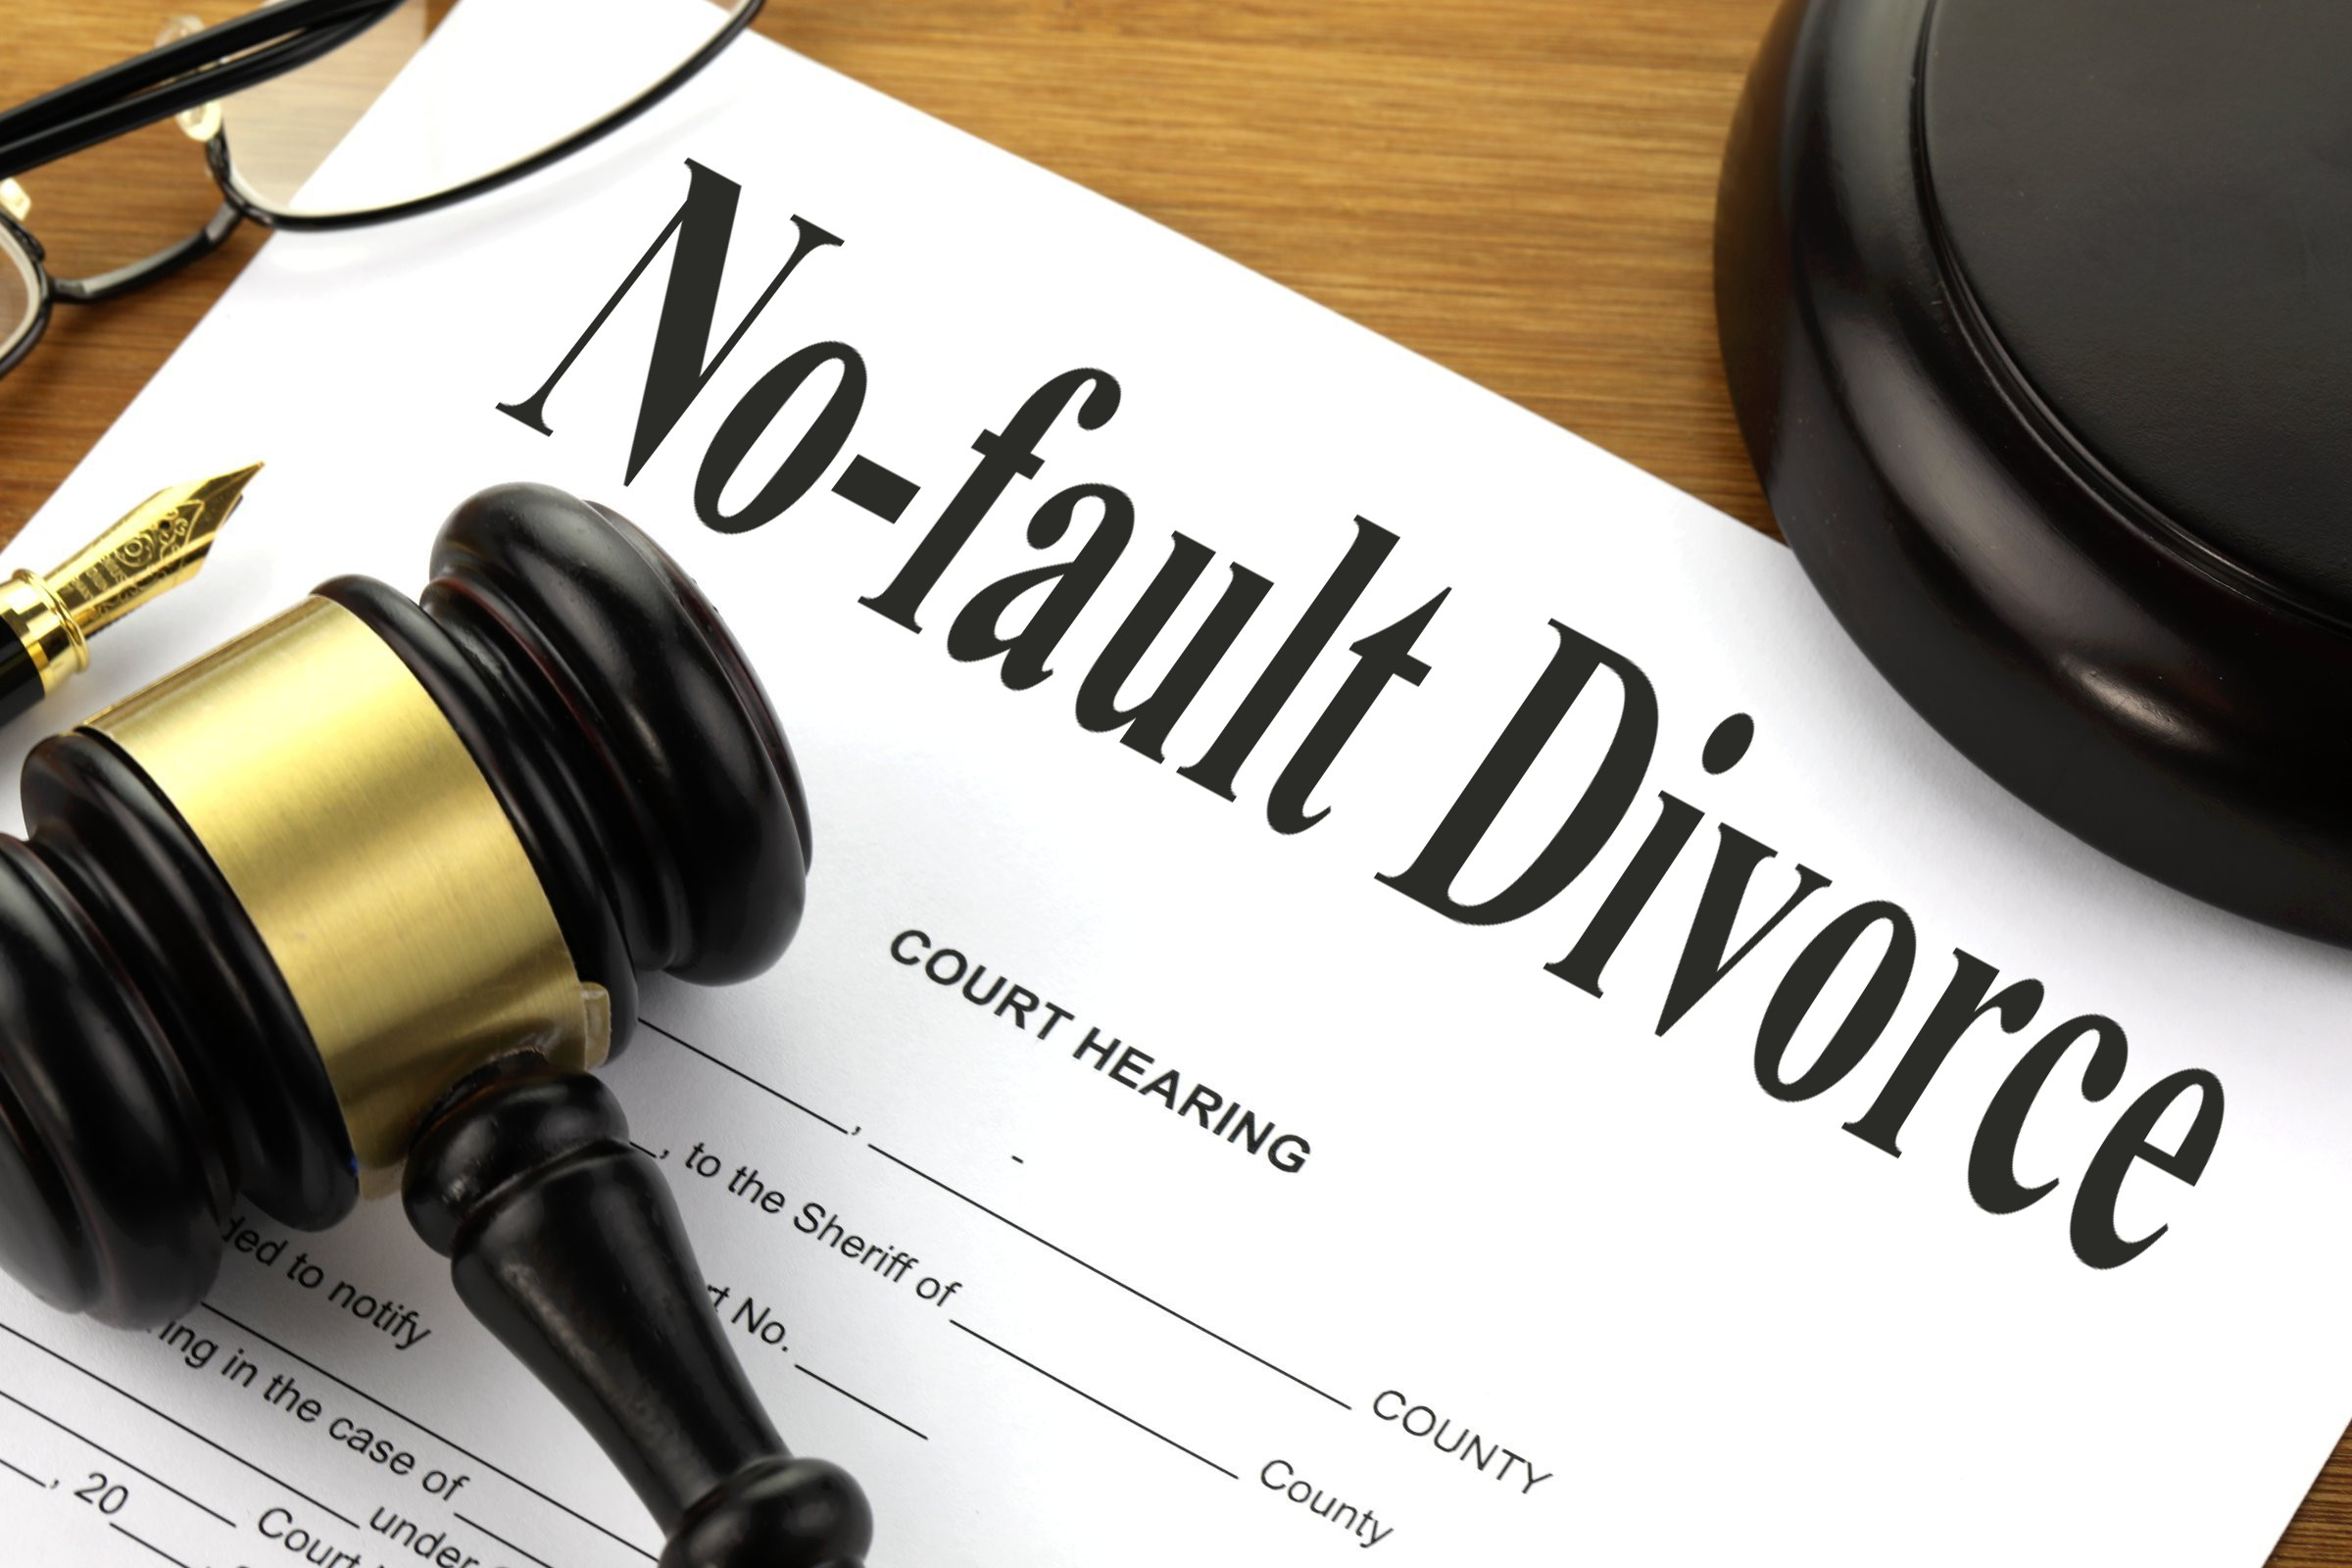 no fault divorce paper on a table